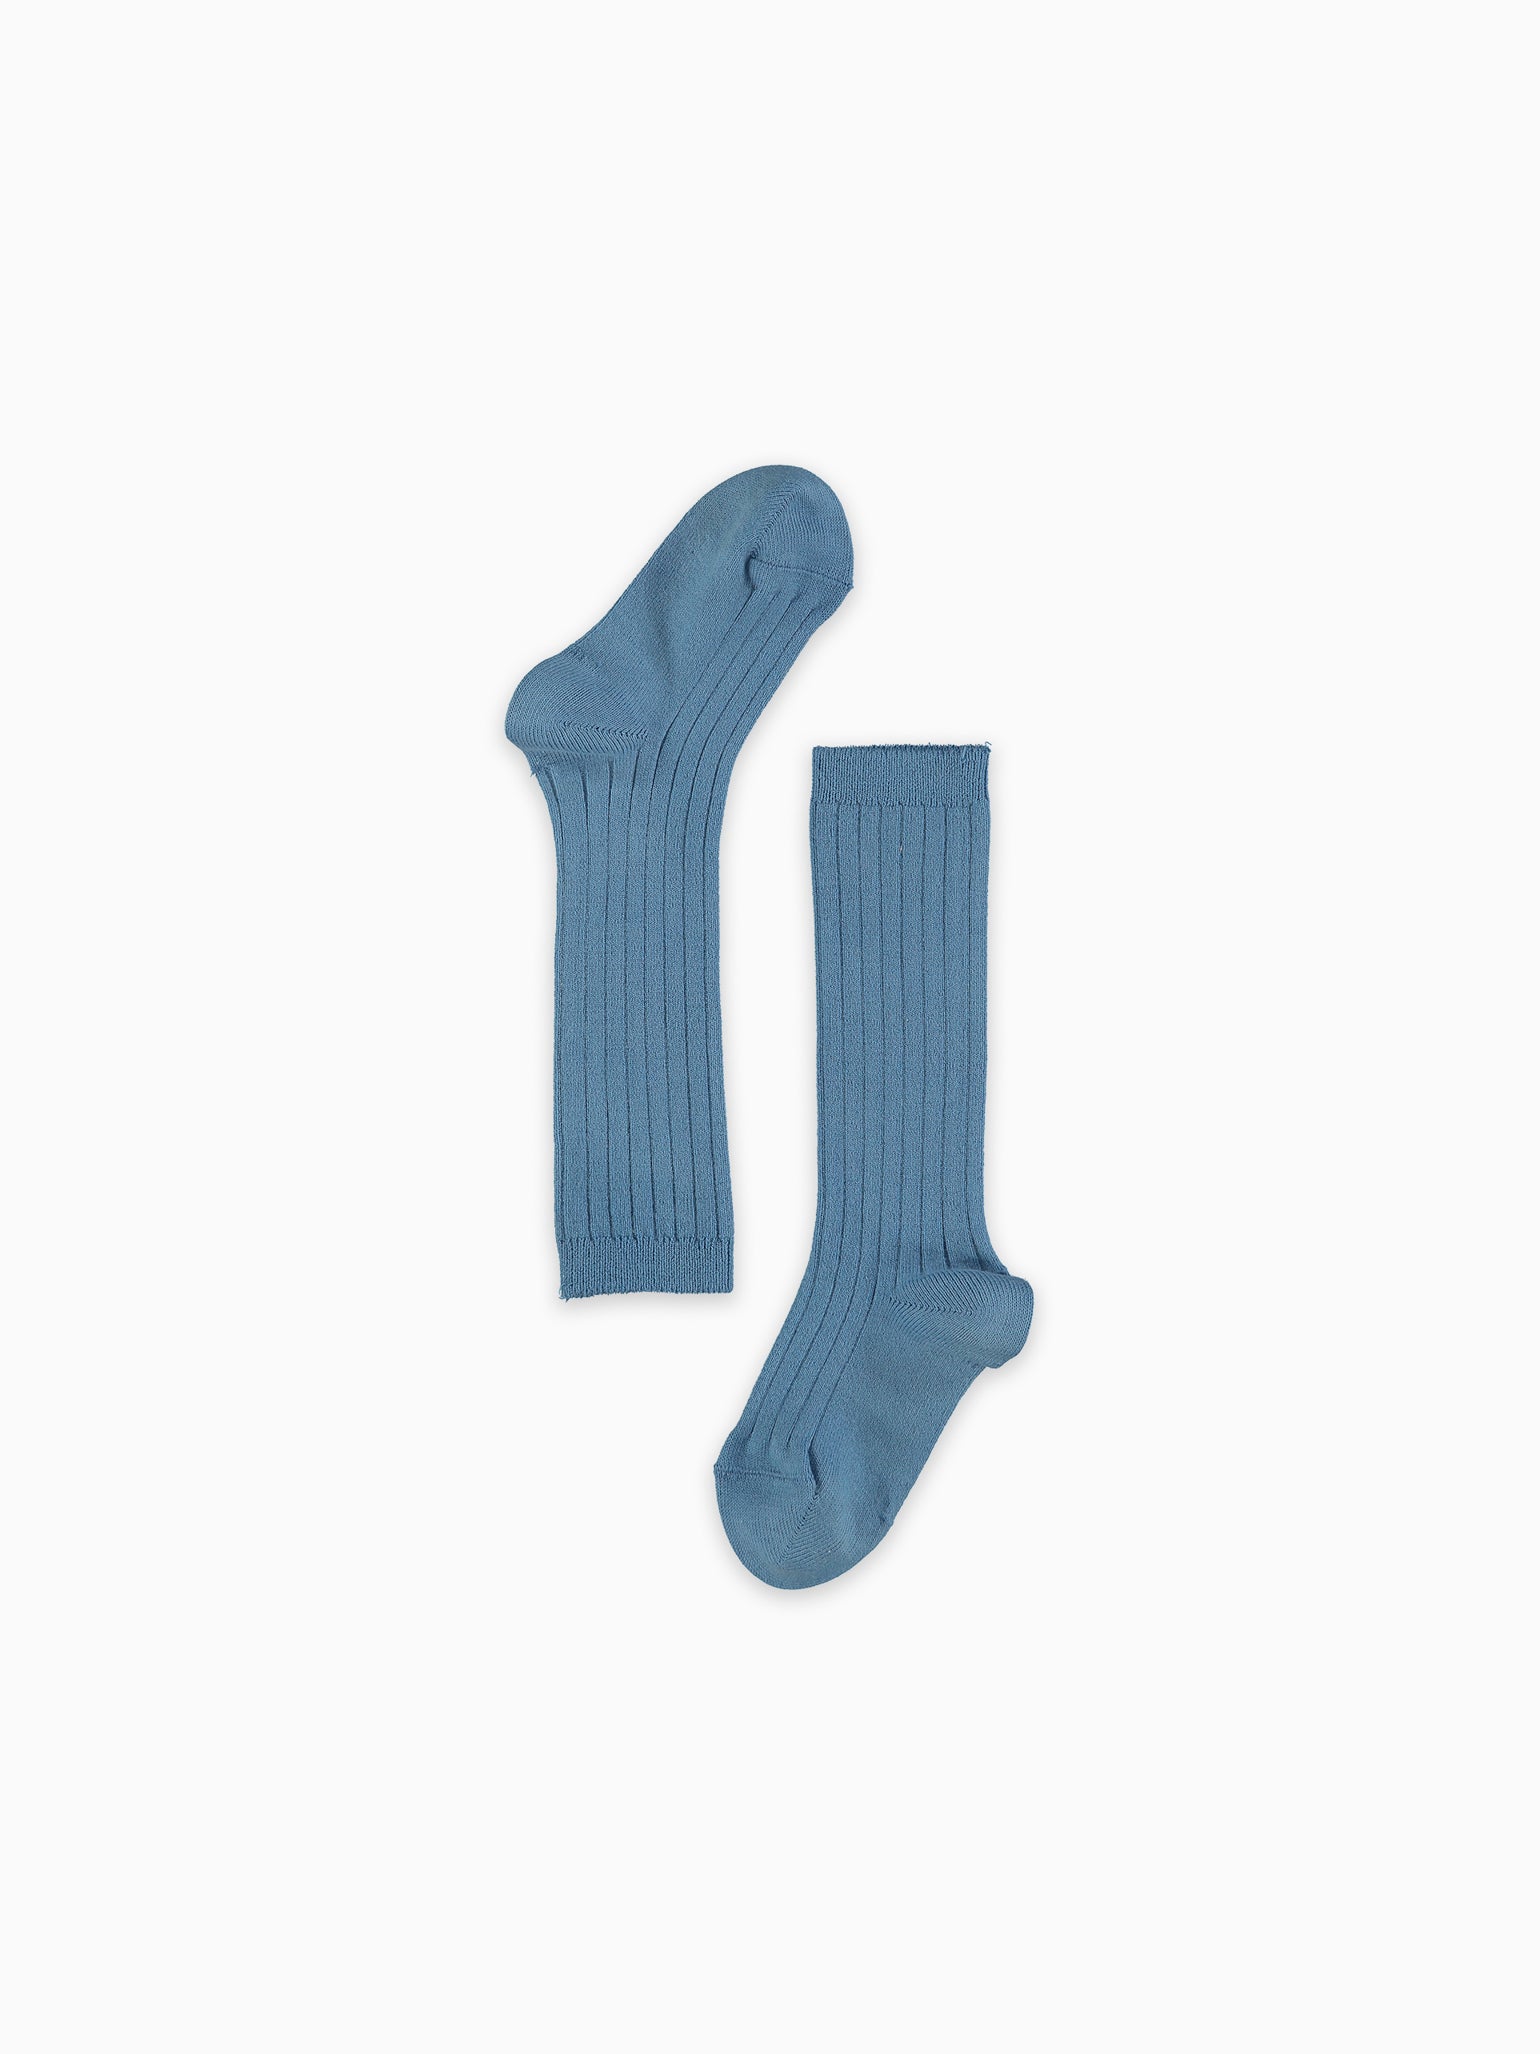 Dusty Blue Ribbed Knee High Kids Socks